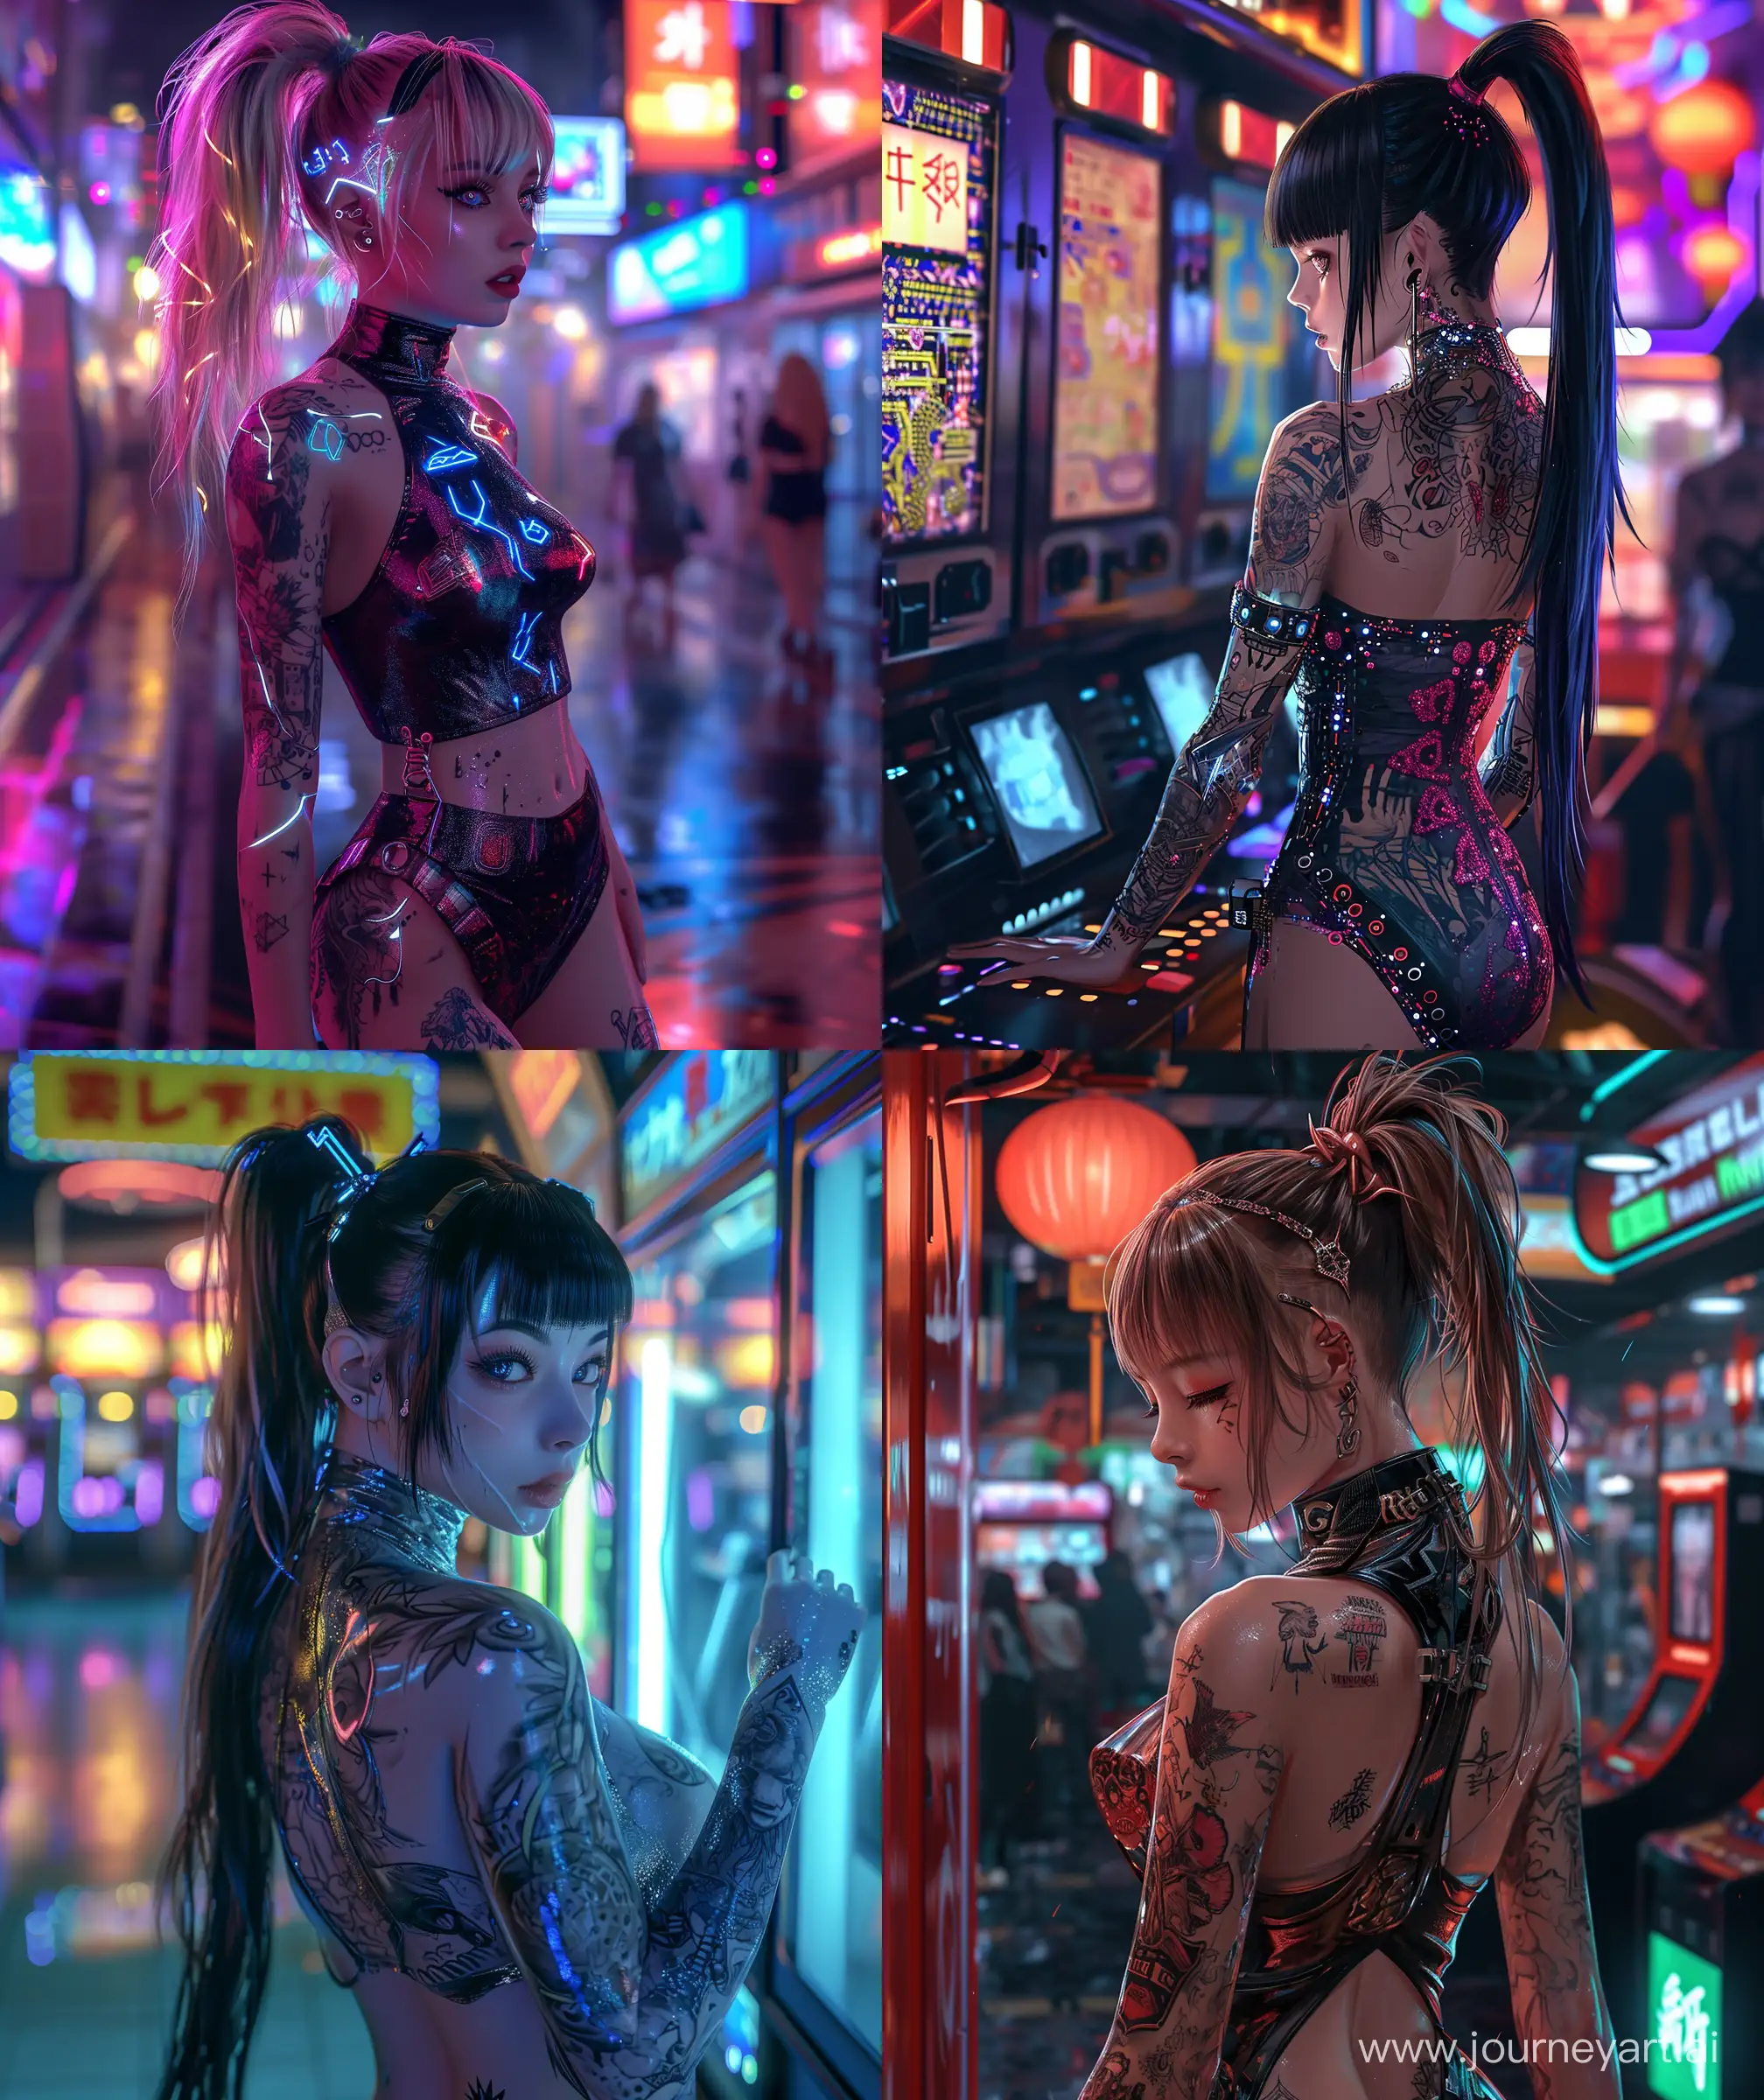 Beautiful-Anime-Cyberpunk-Girl-in-Arcade-Illumination